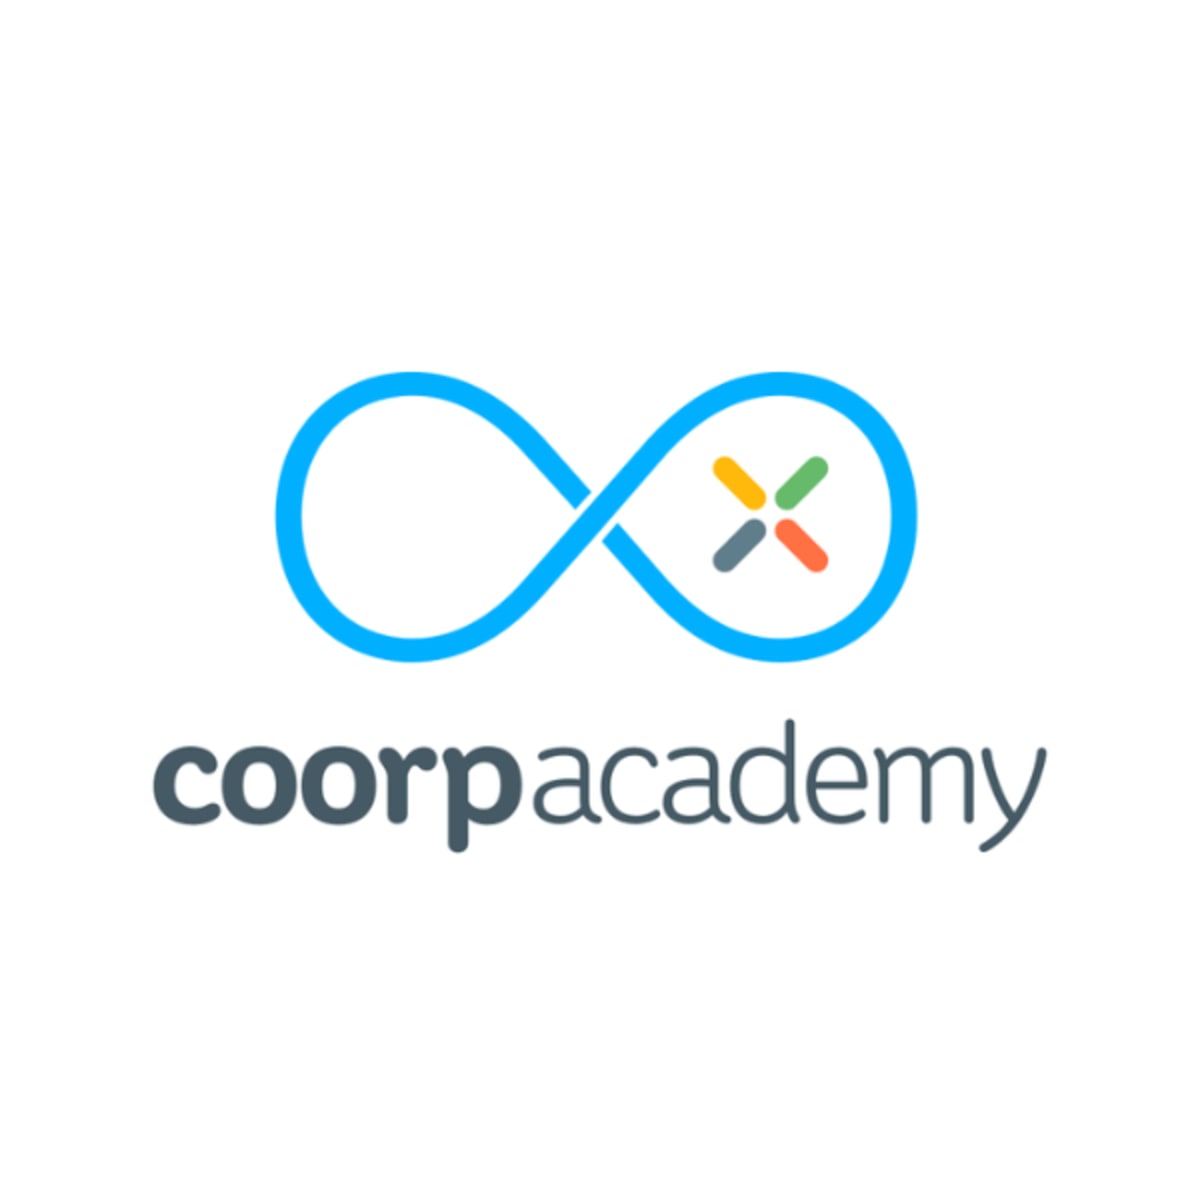 Coorpacademy logo